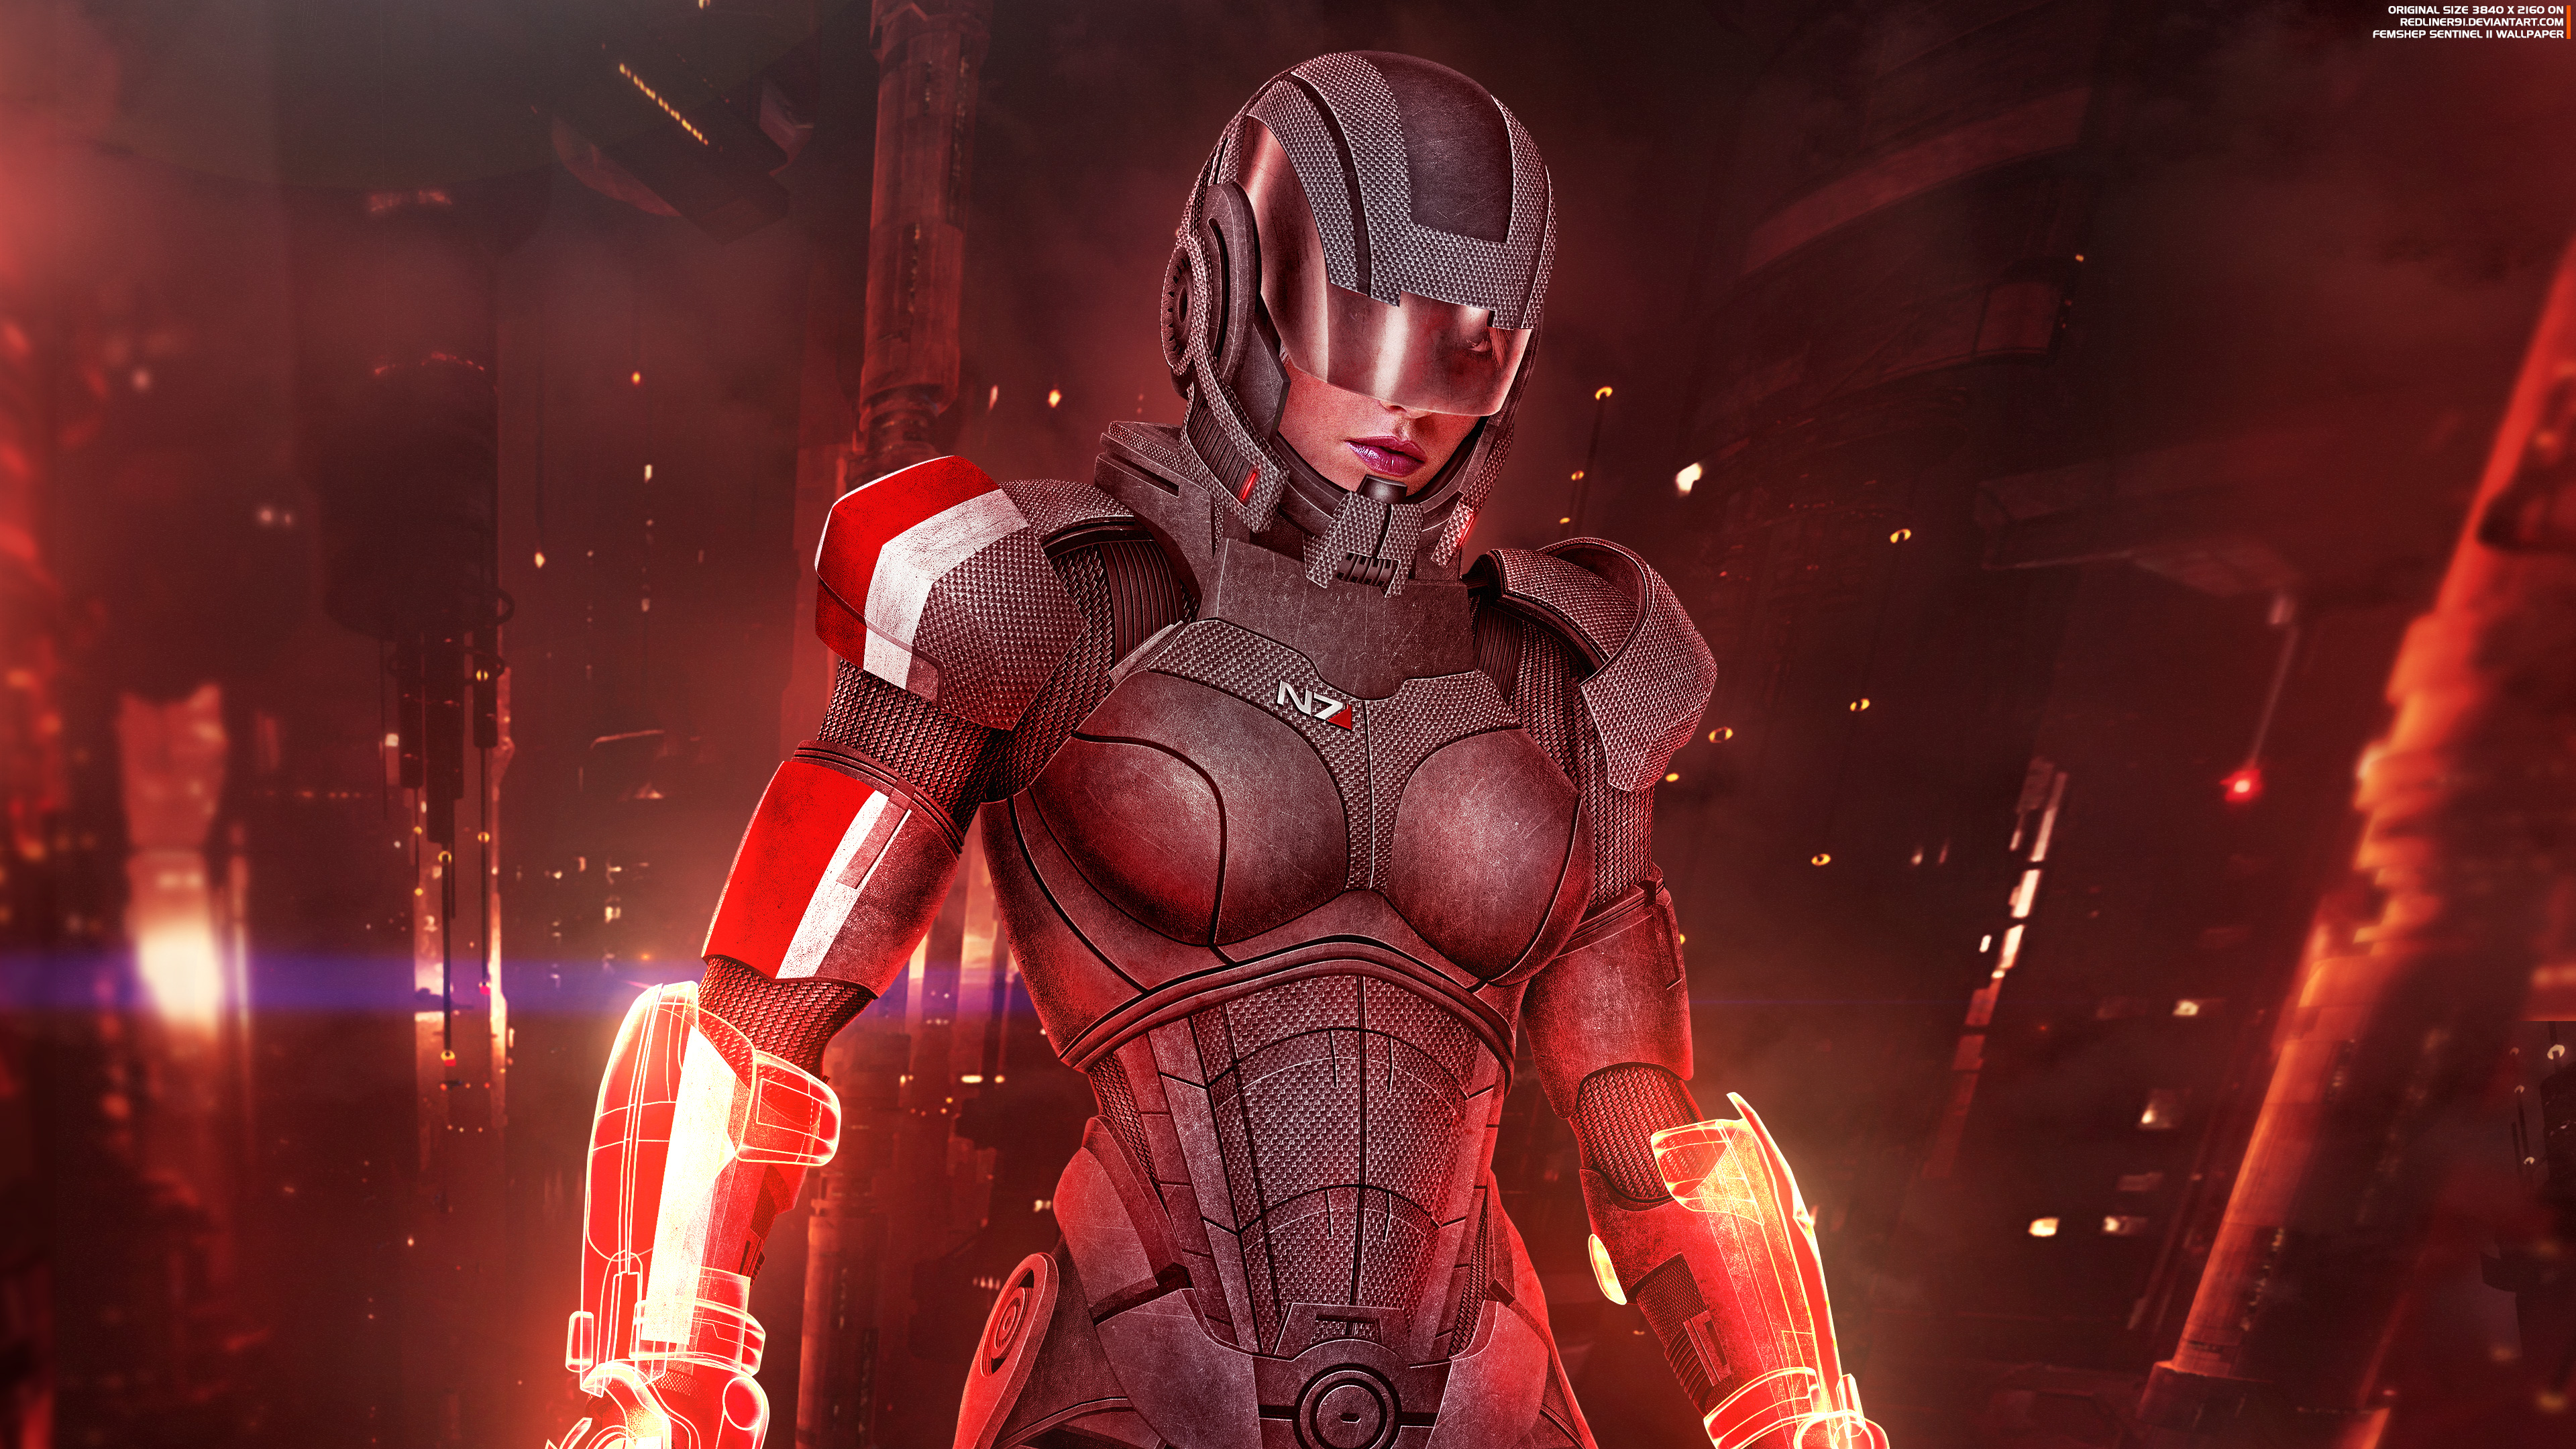 Mass Effect 3 Shepard Femshep Hd Games 4k Wallpapers Images